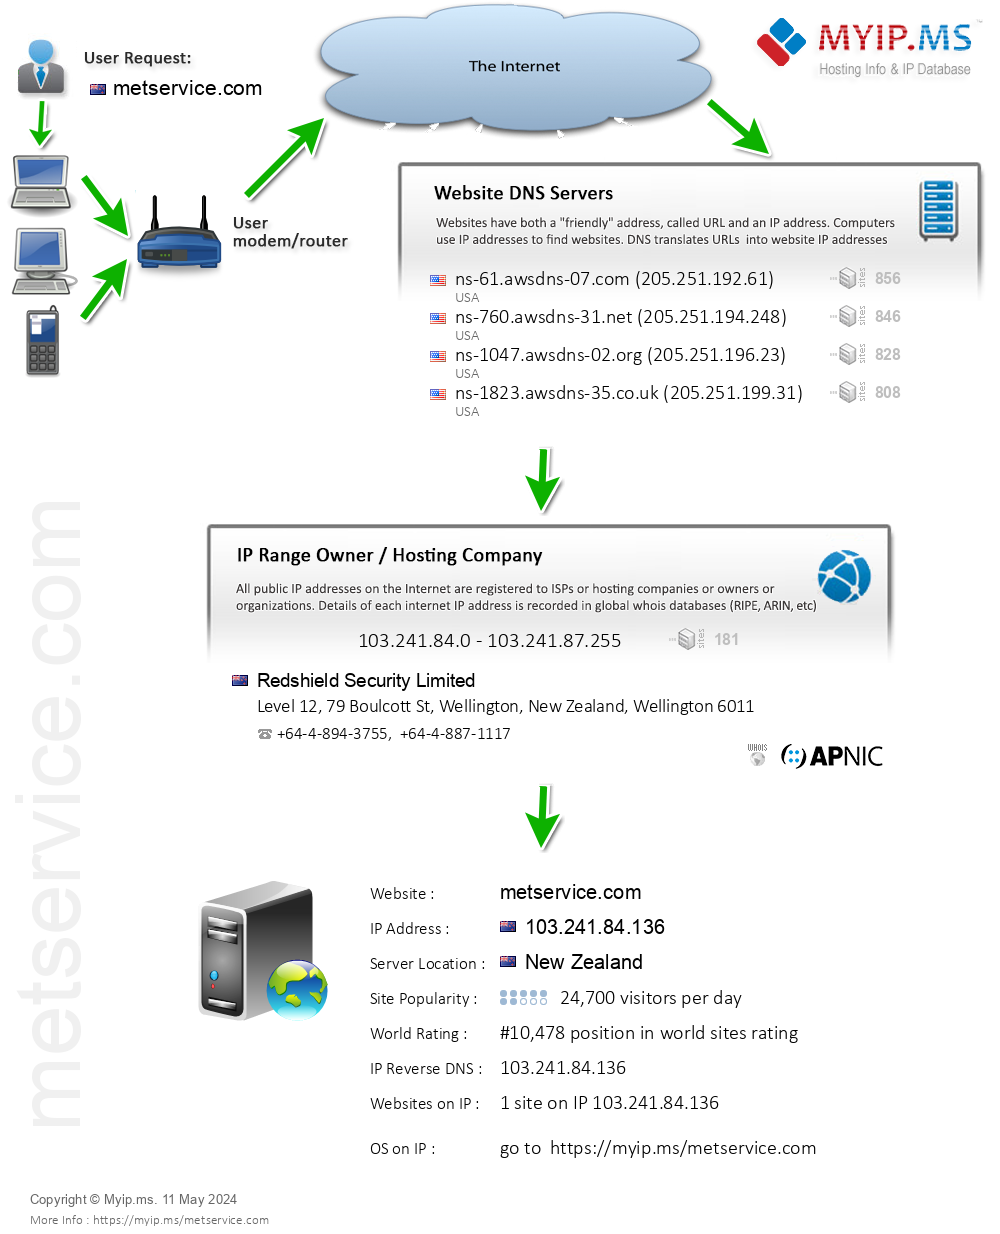 Metservice.com - Website Hosting Visual IP Diagram